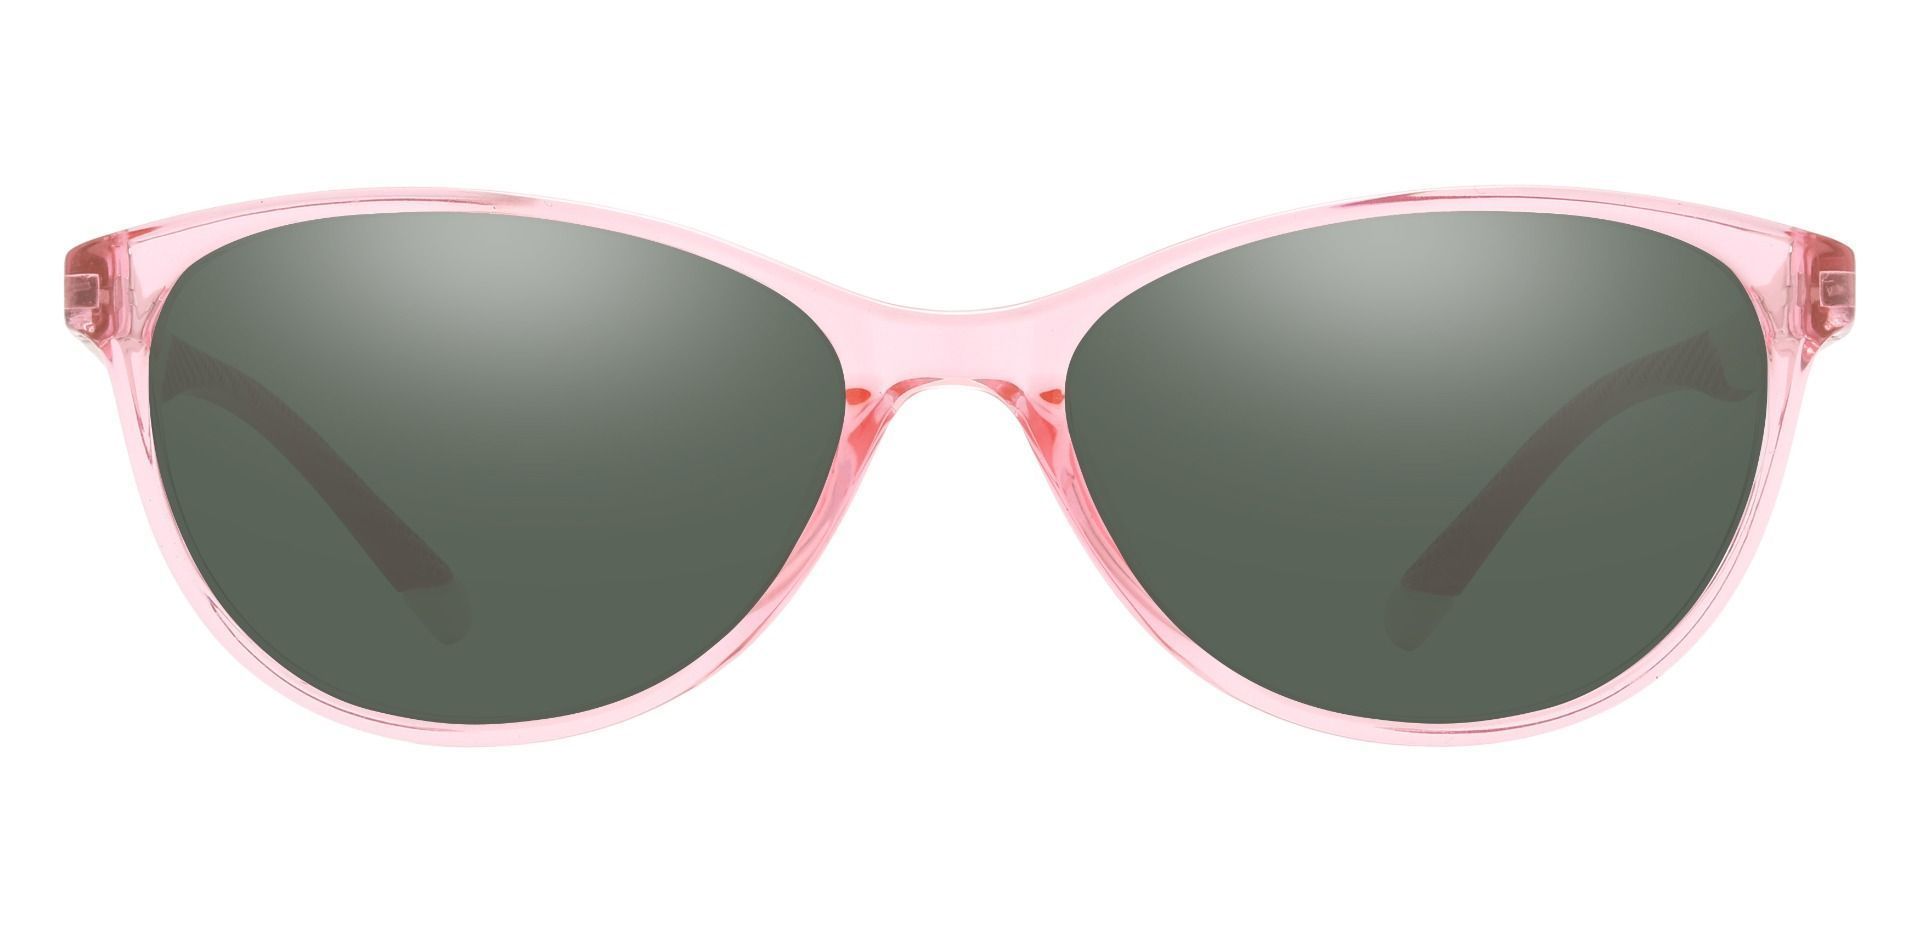 Mildred Cat Eye Prescription Sunglasses - Pink Frame With Green Lenses